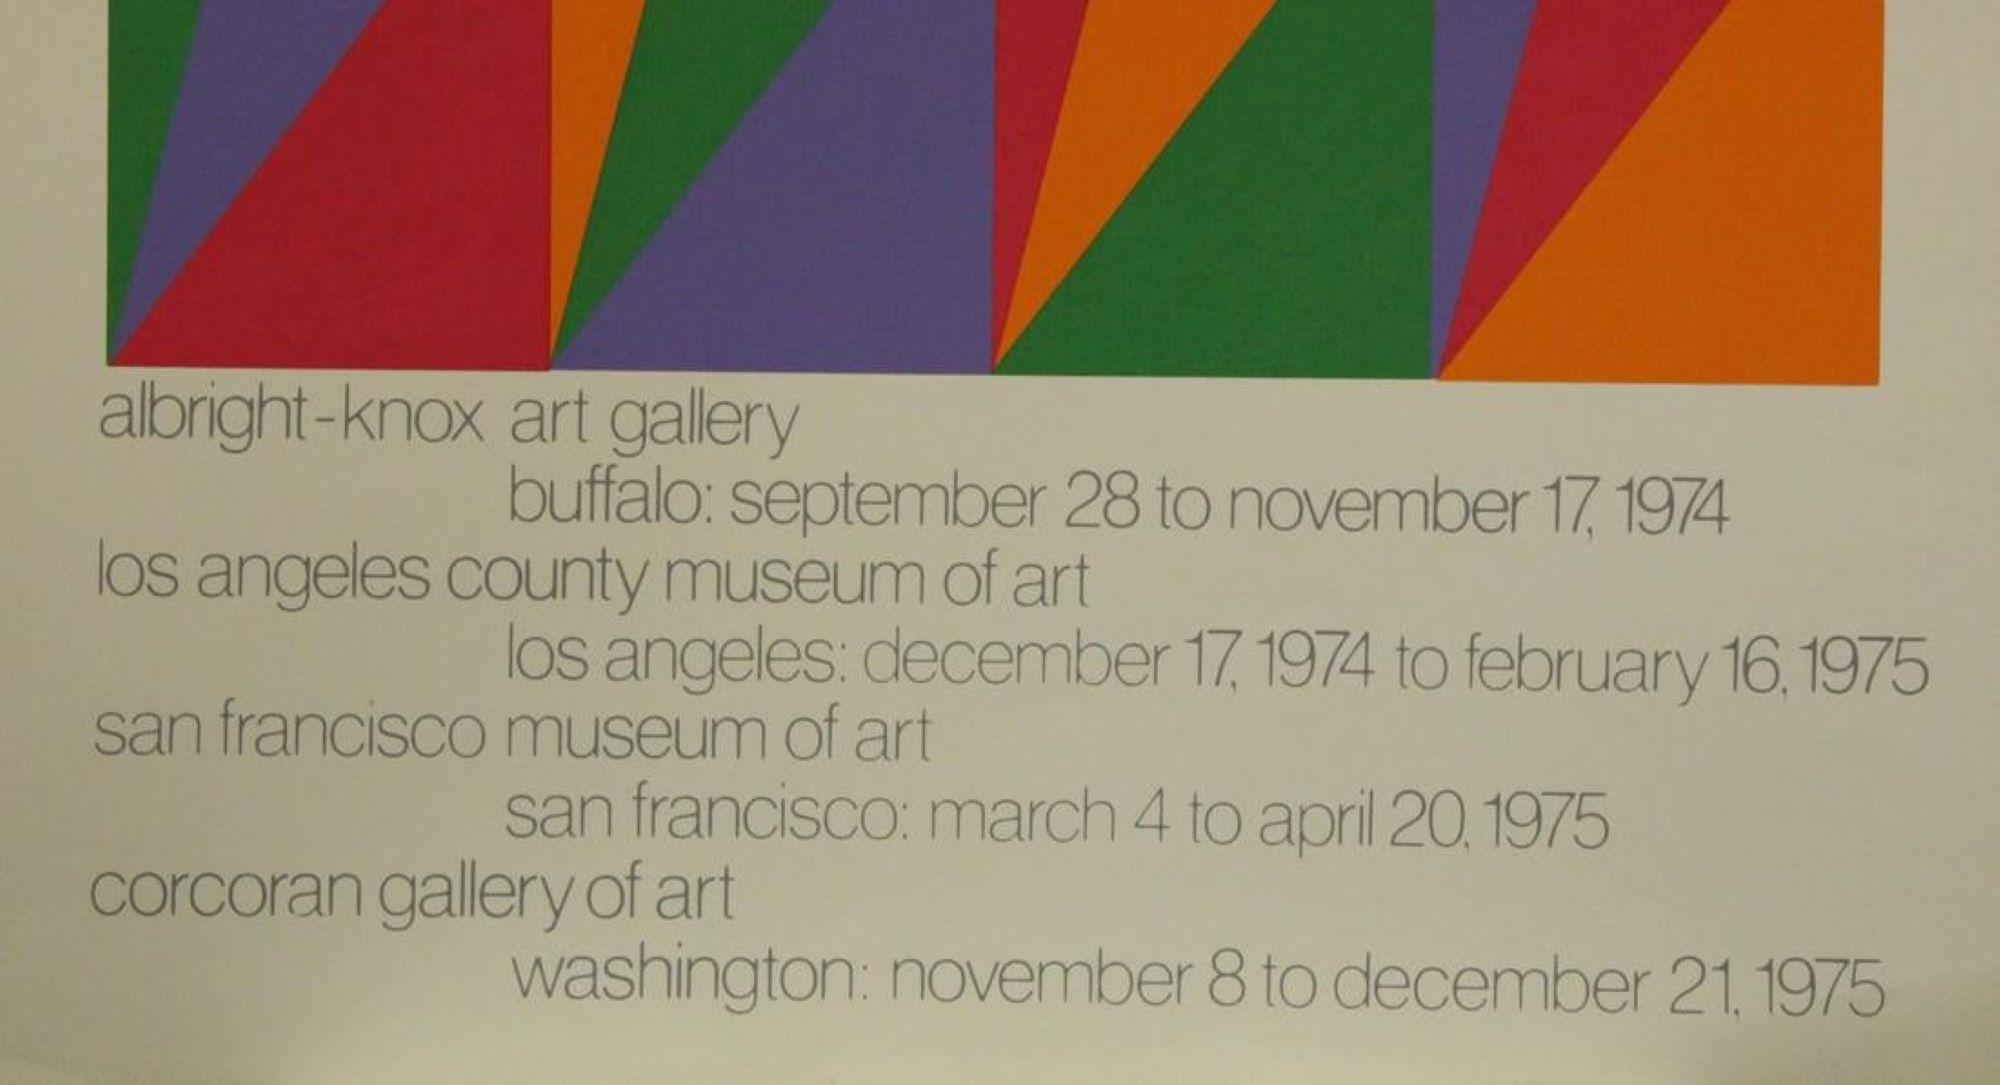 Albright-Knox Art Gallery, Buffalo: September 28 to November 17, 1974 Poster  - Print by Max Bill